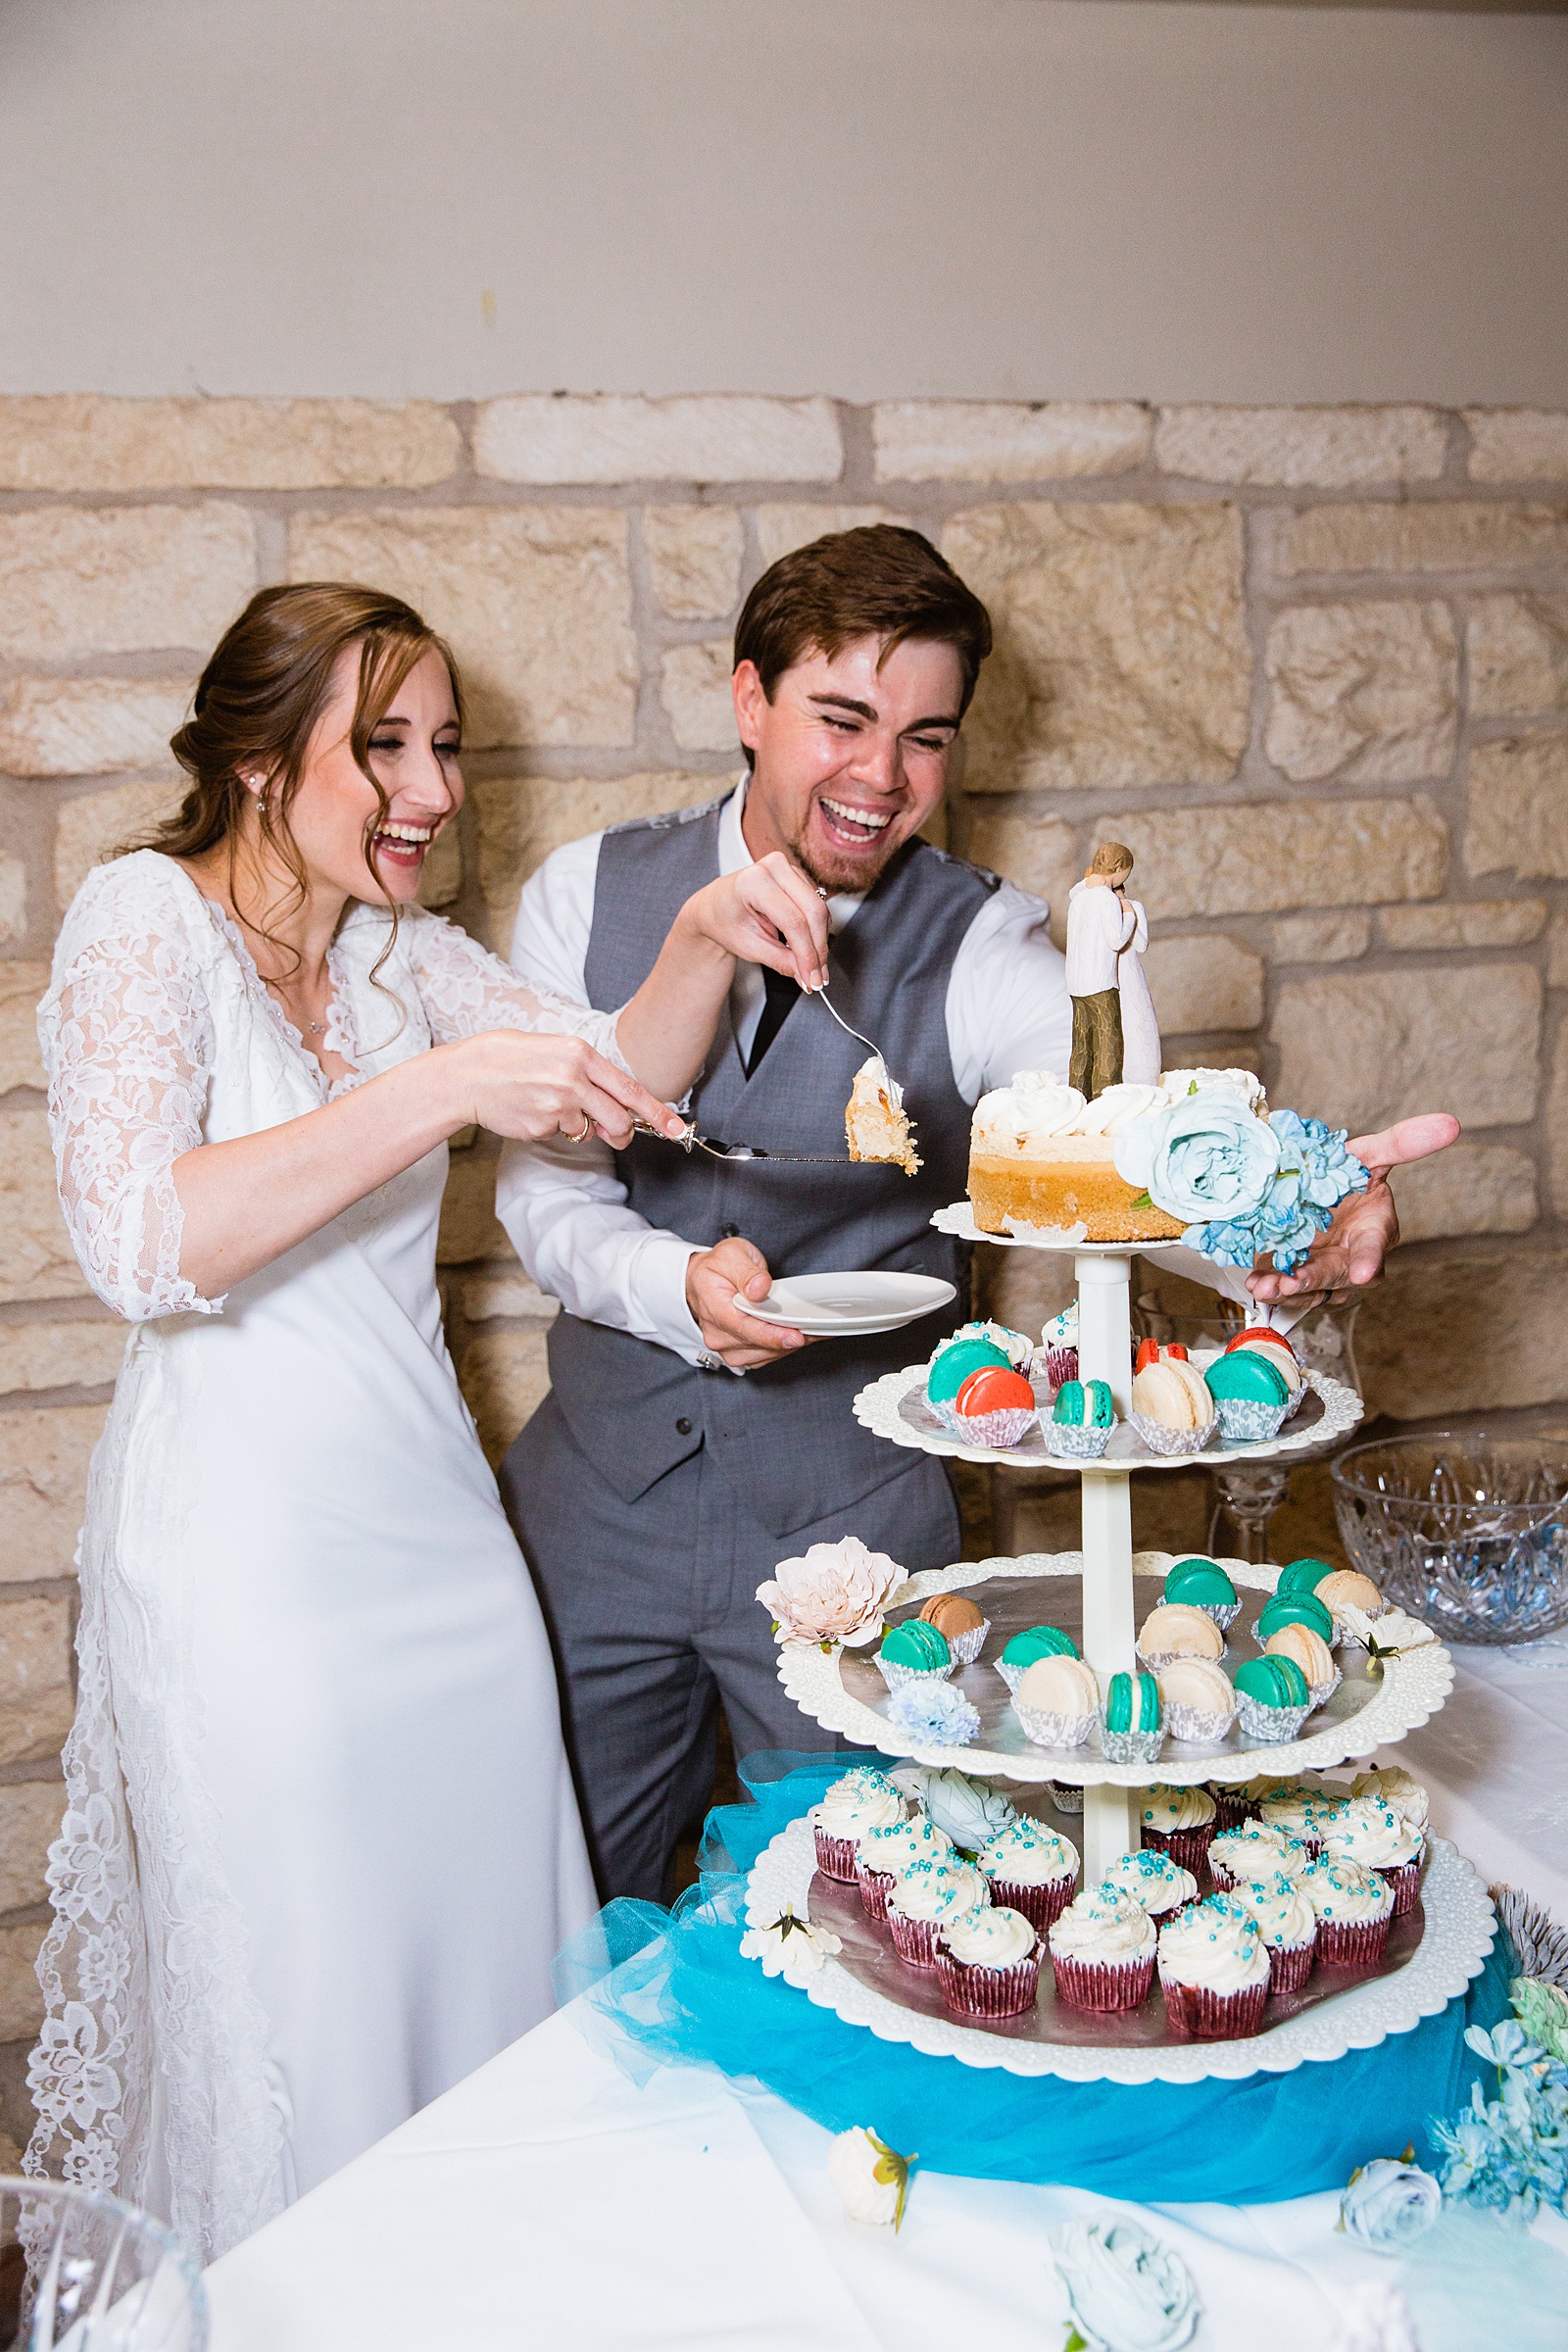 Newlyweds cutting their wedding cake at their Ocotillo Oasis wedding reception by Arizona wedding photographer PMA Photography.